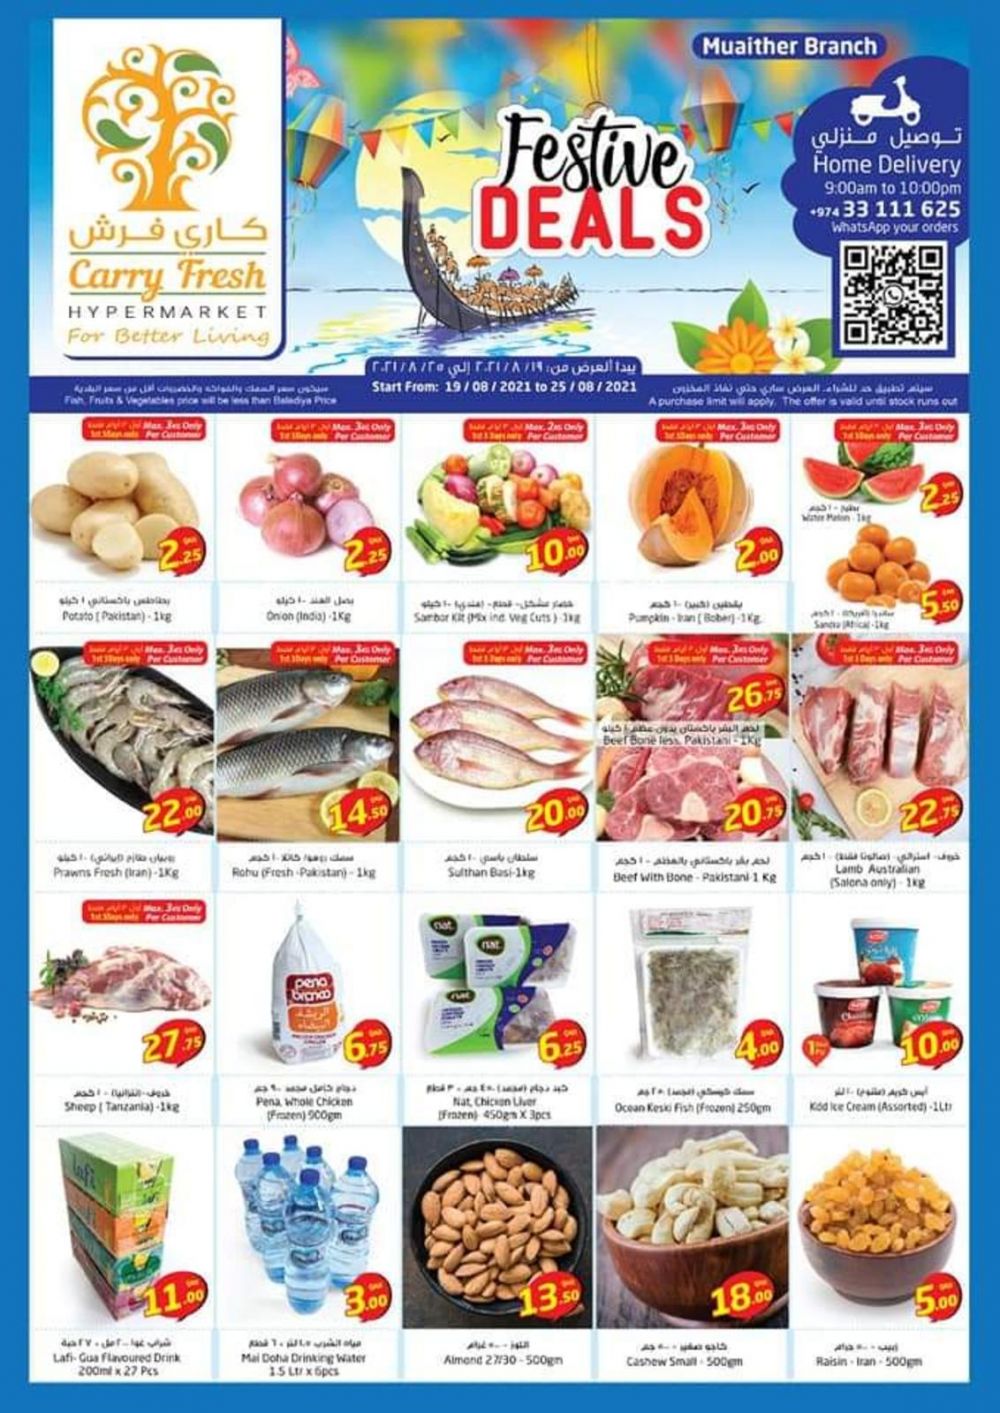 Carry Fresh Hypermarket Qatar offers 2021